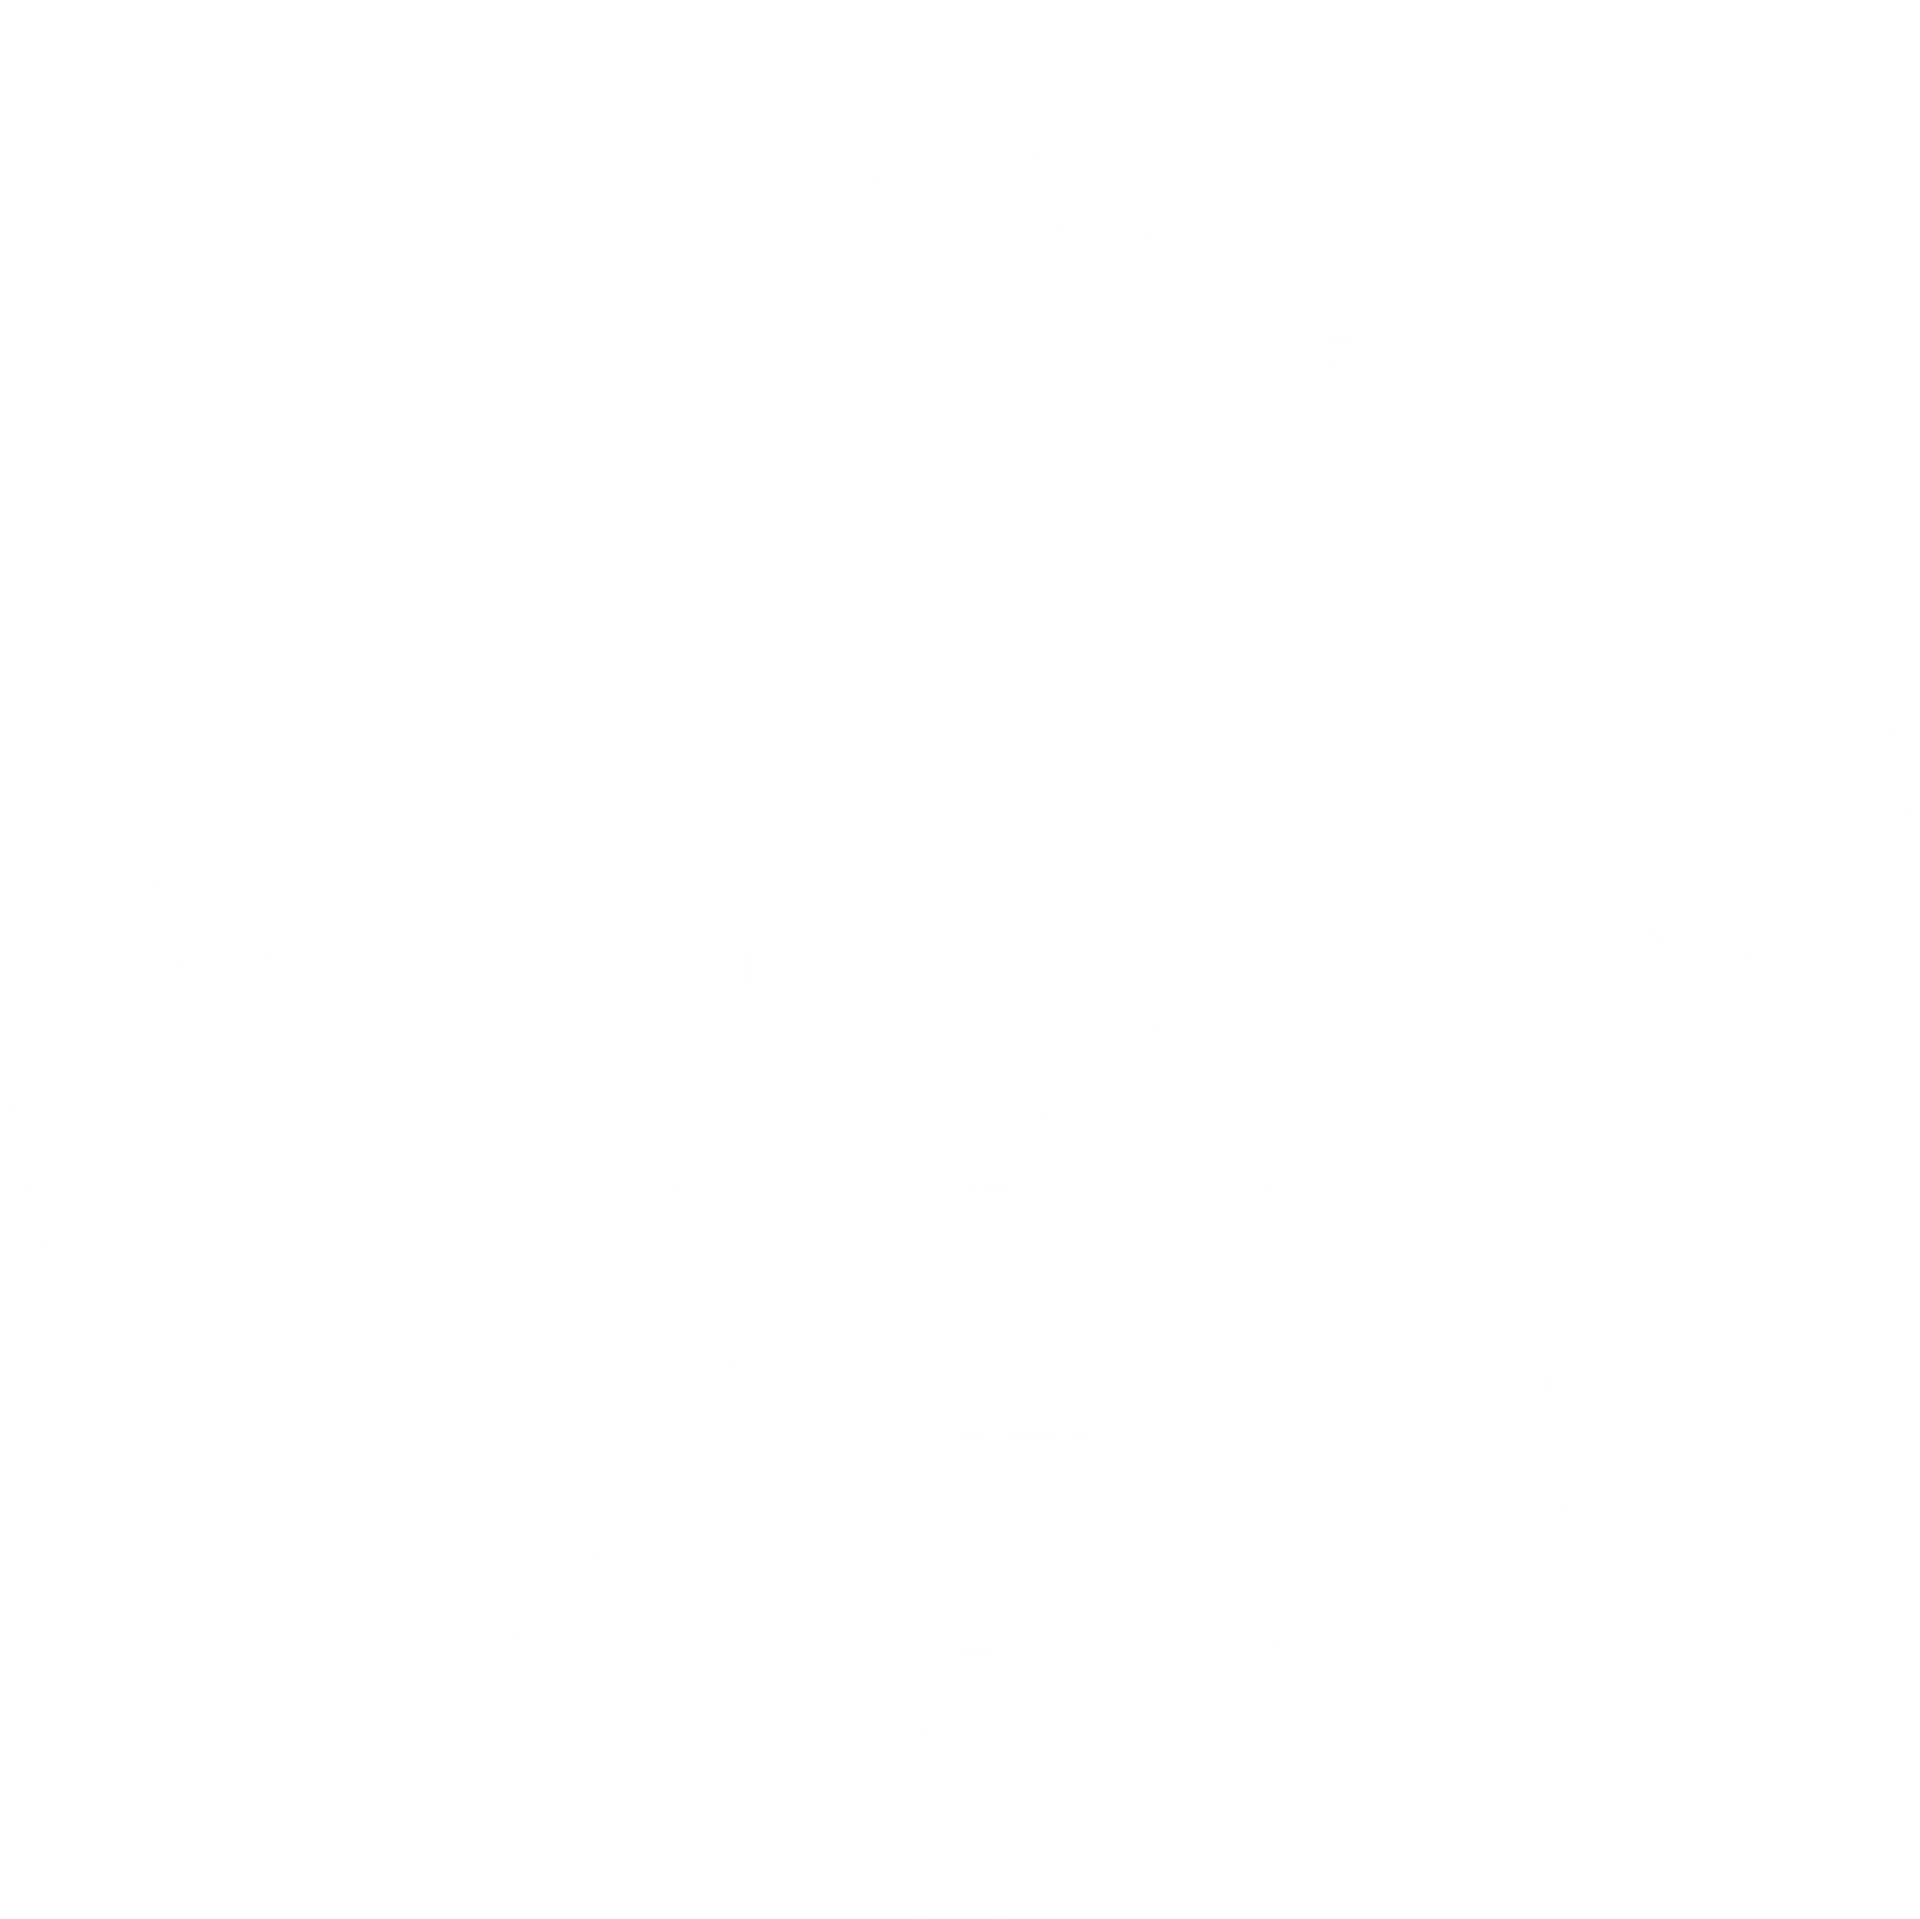 Farmand Investment Services Logo